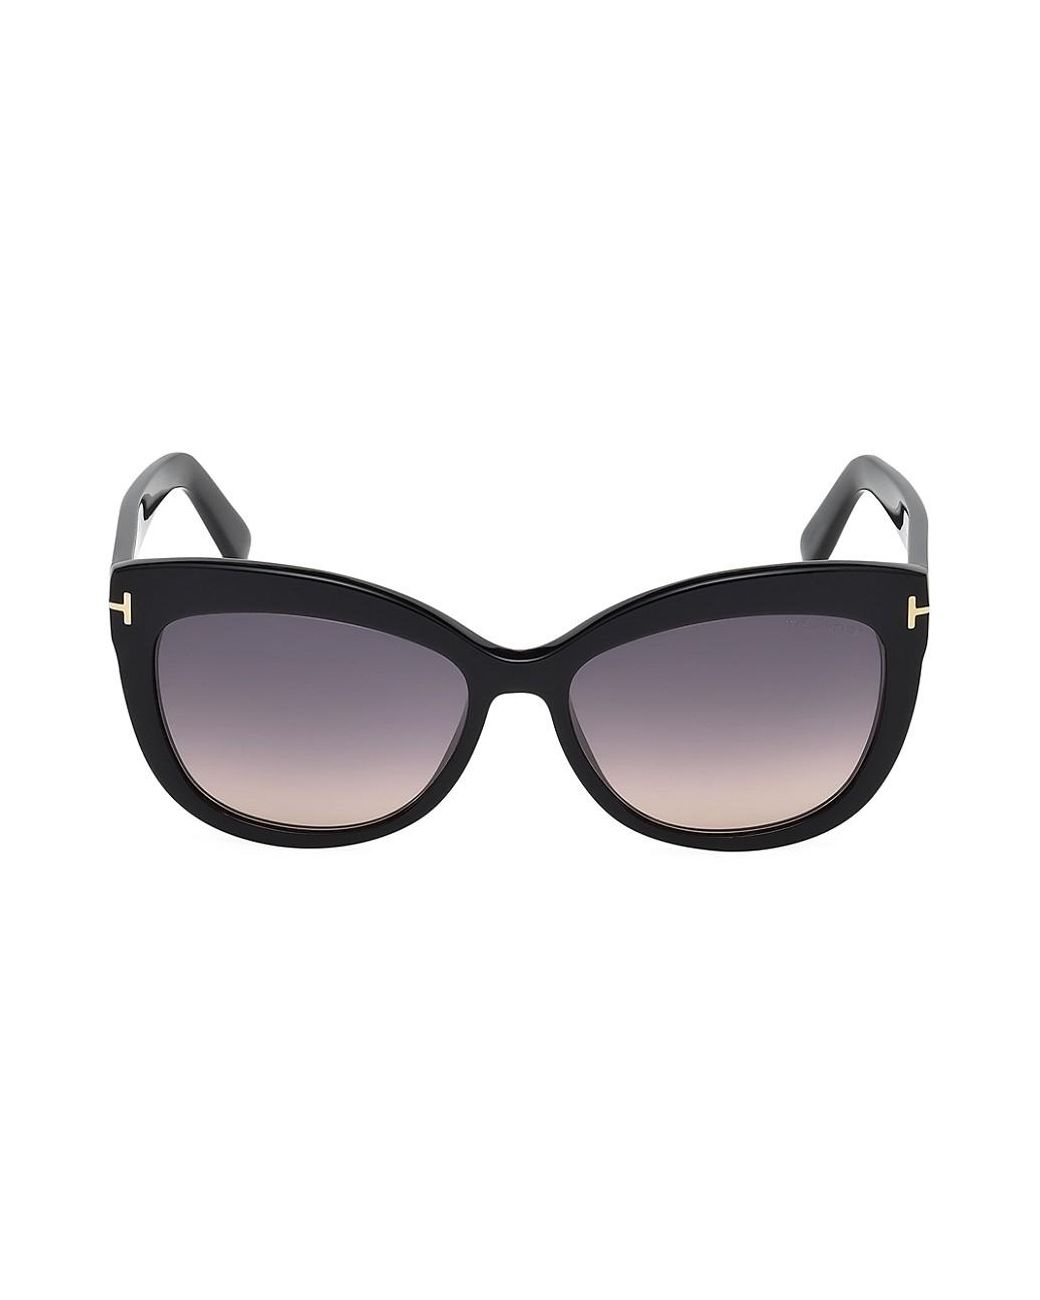 Tom Ford Alistair 56mm Polarized Lens Cat Eye Sunglasses in Black - Lyst